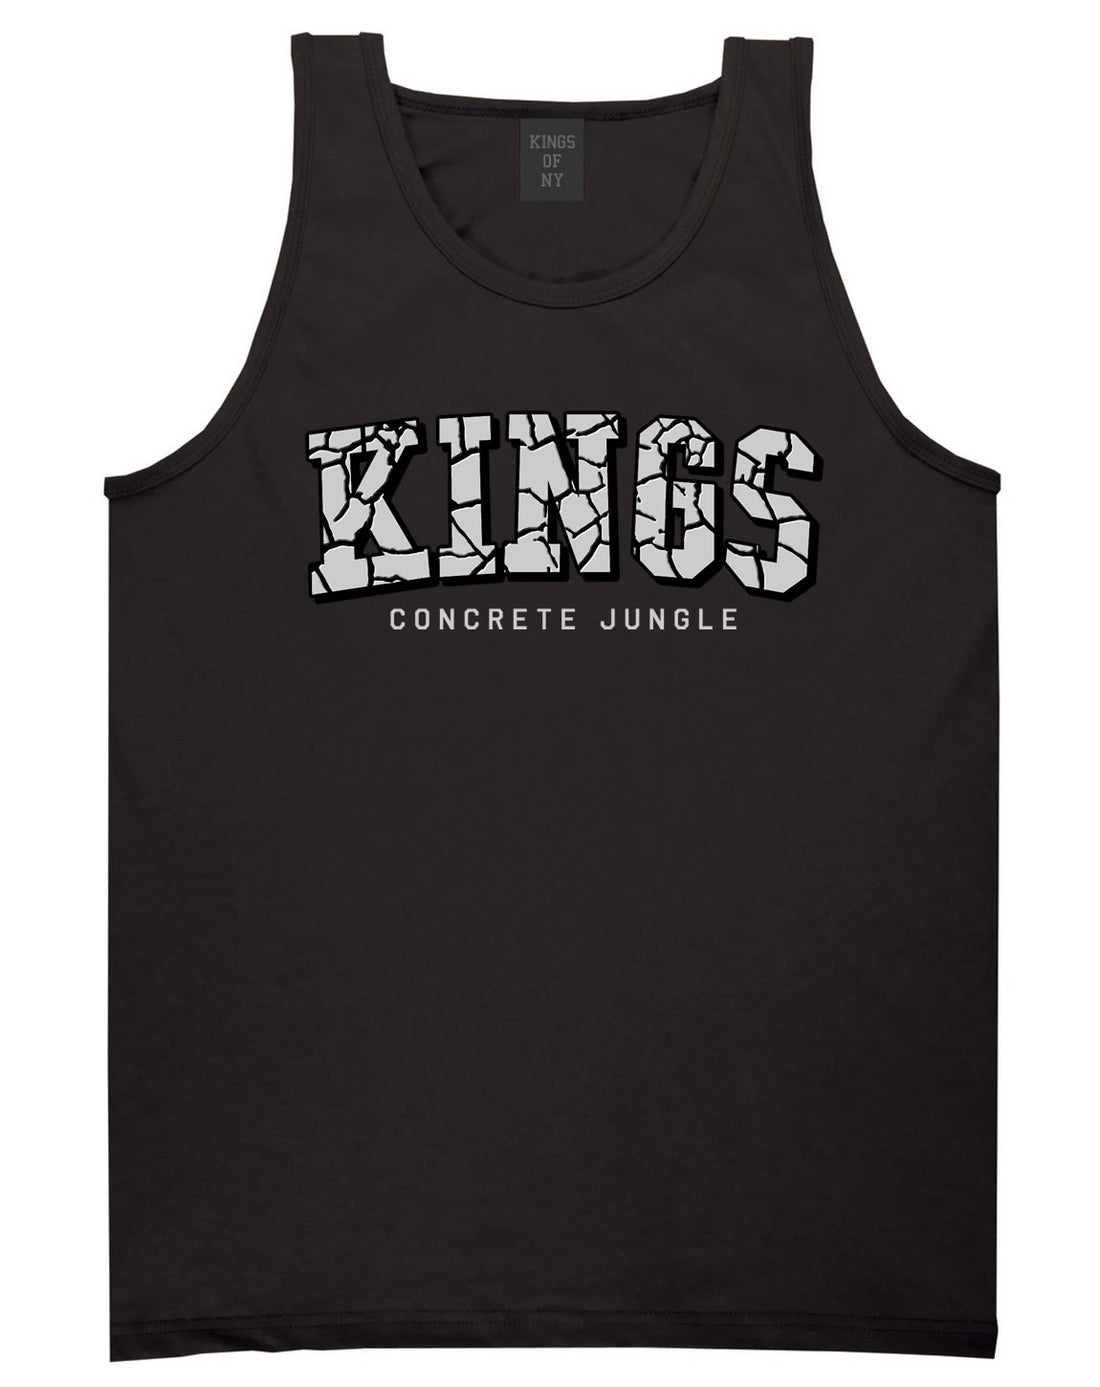 KINGS Conrete Jungle Mens Tank Top Shirt Black